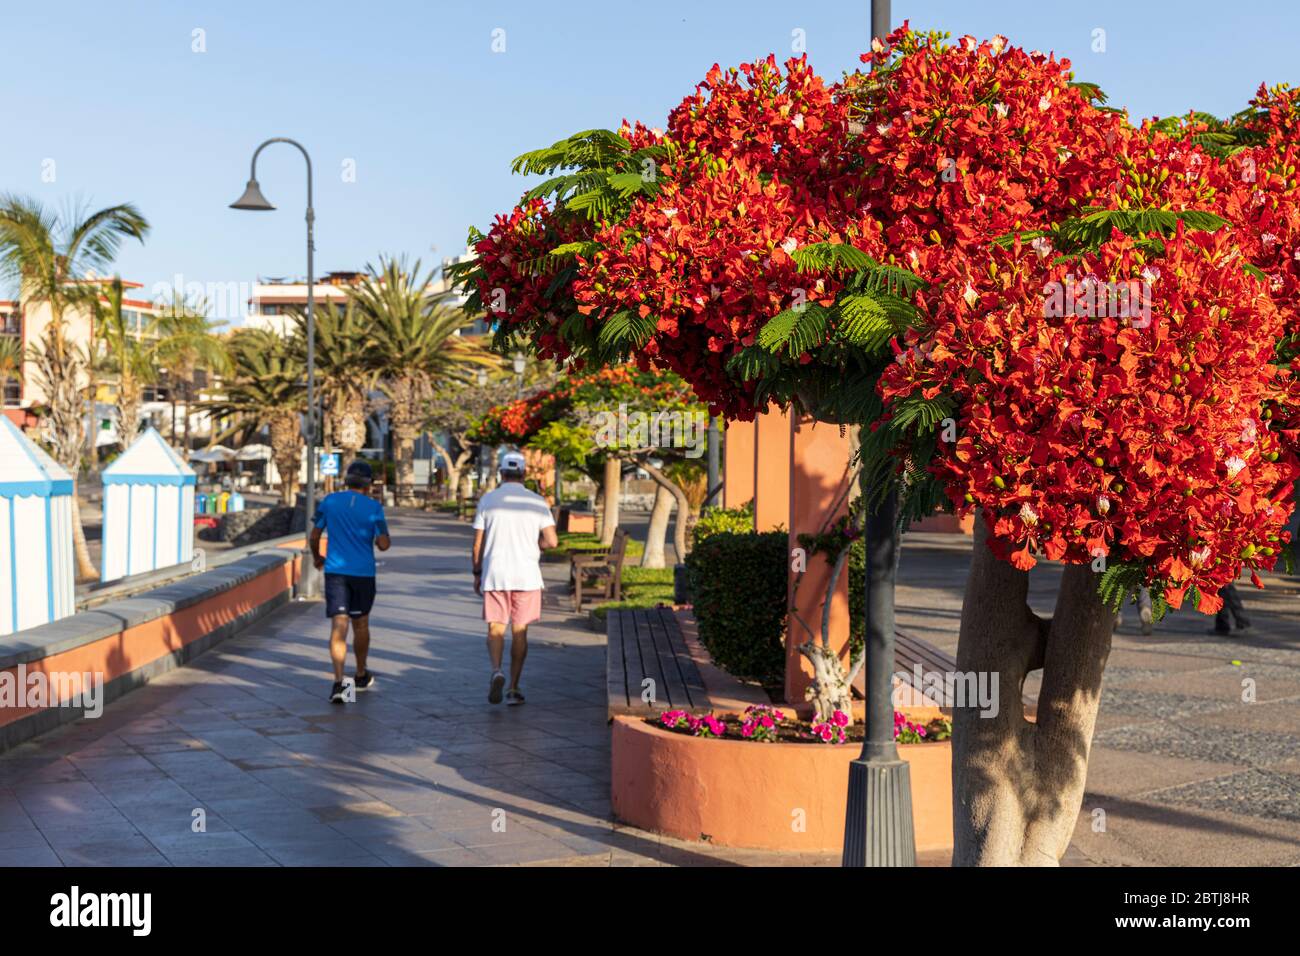 Delonix regia, arbre flamboyant avec des fleurs rouges sur la promenade pendant la phase deux de la désescalade de l'état d'urgence, Covid 19, coronaviru Banque D'Images